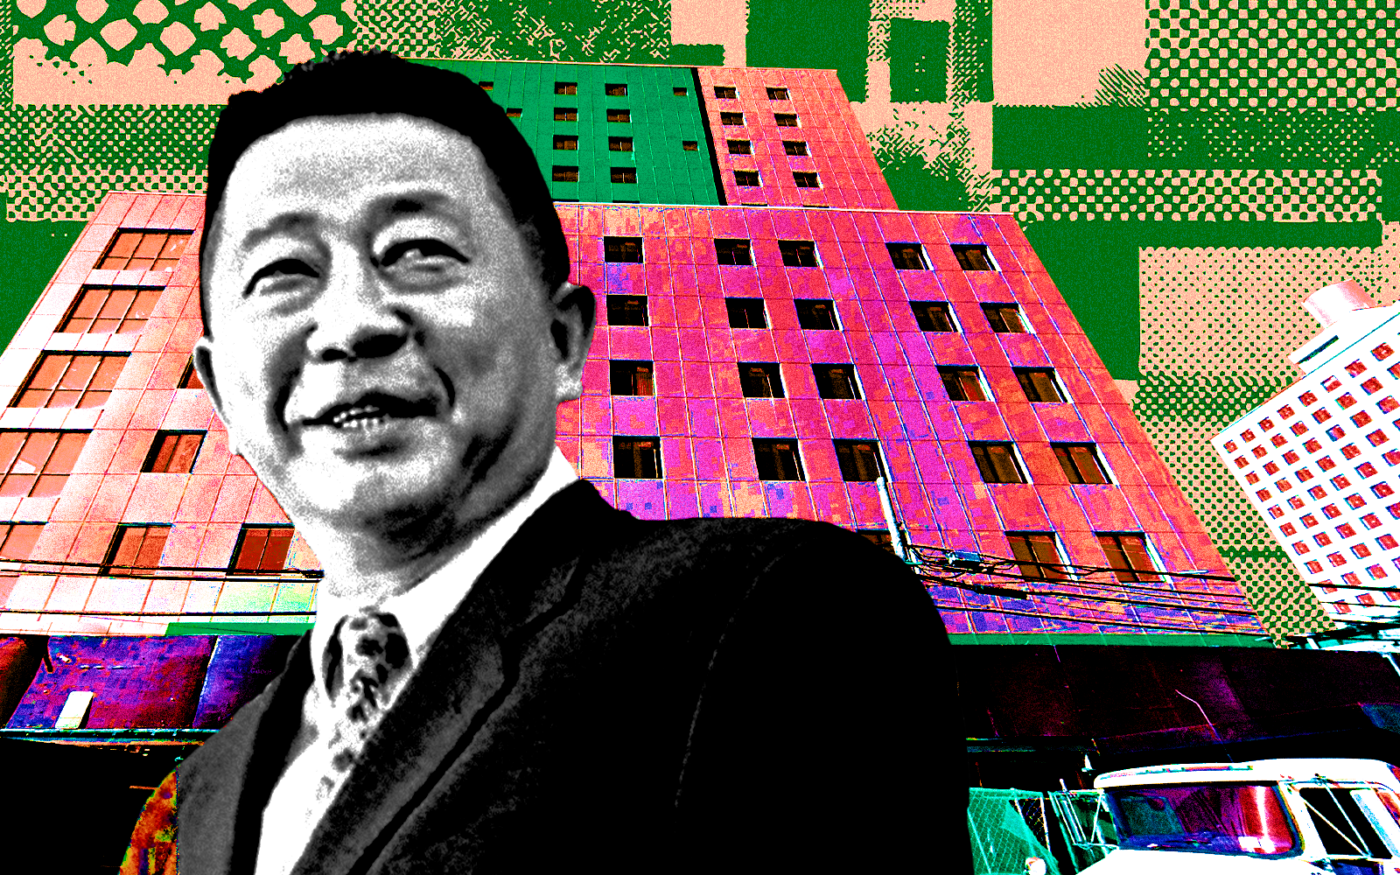 Sam Chang Sells LIC Hotel for $40M